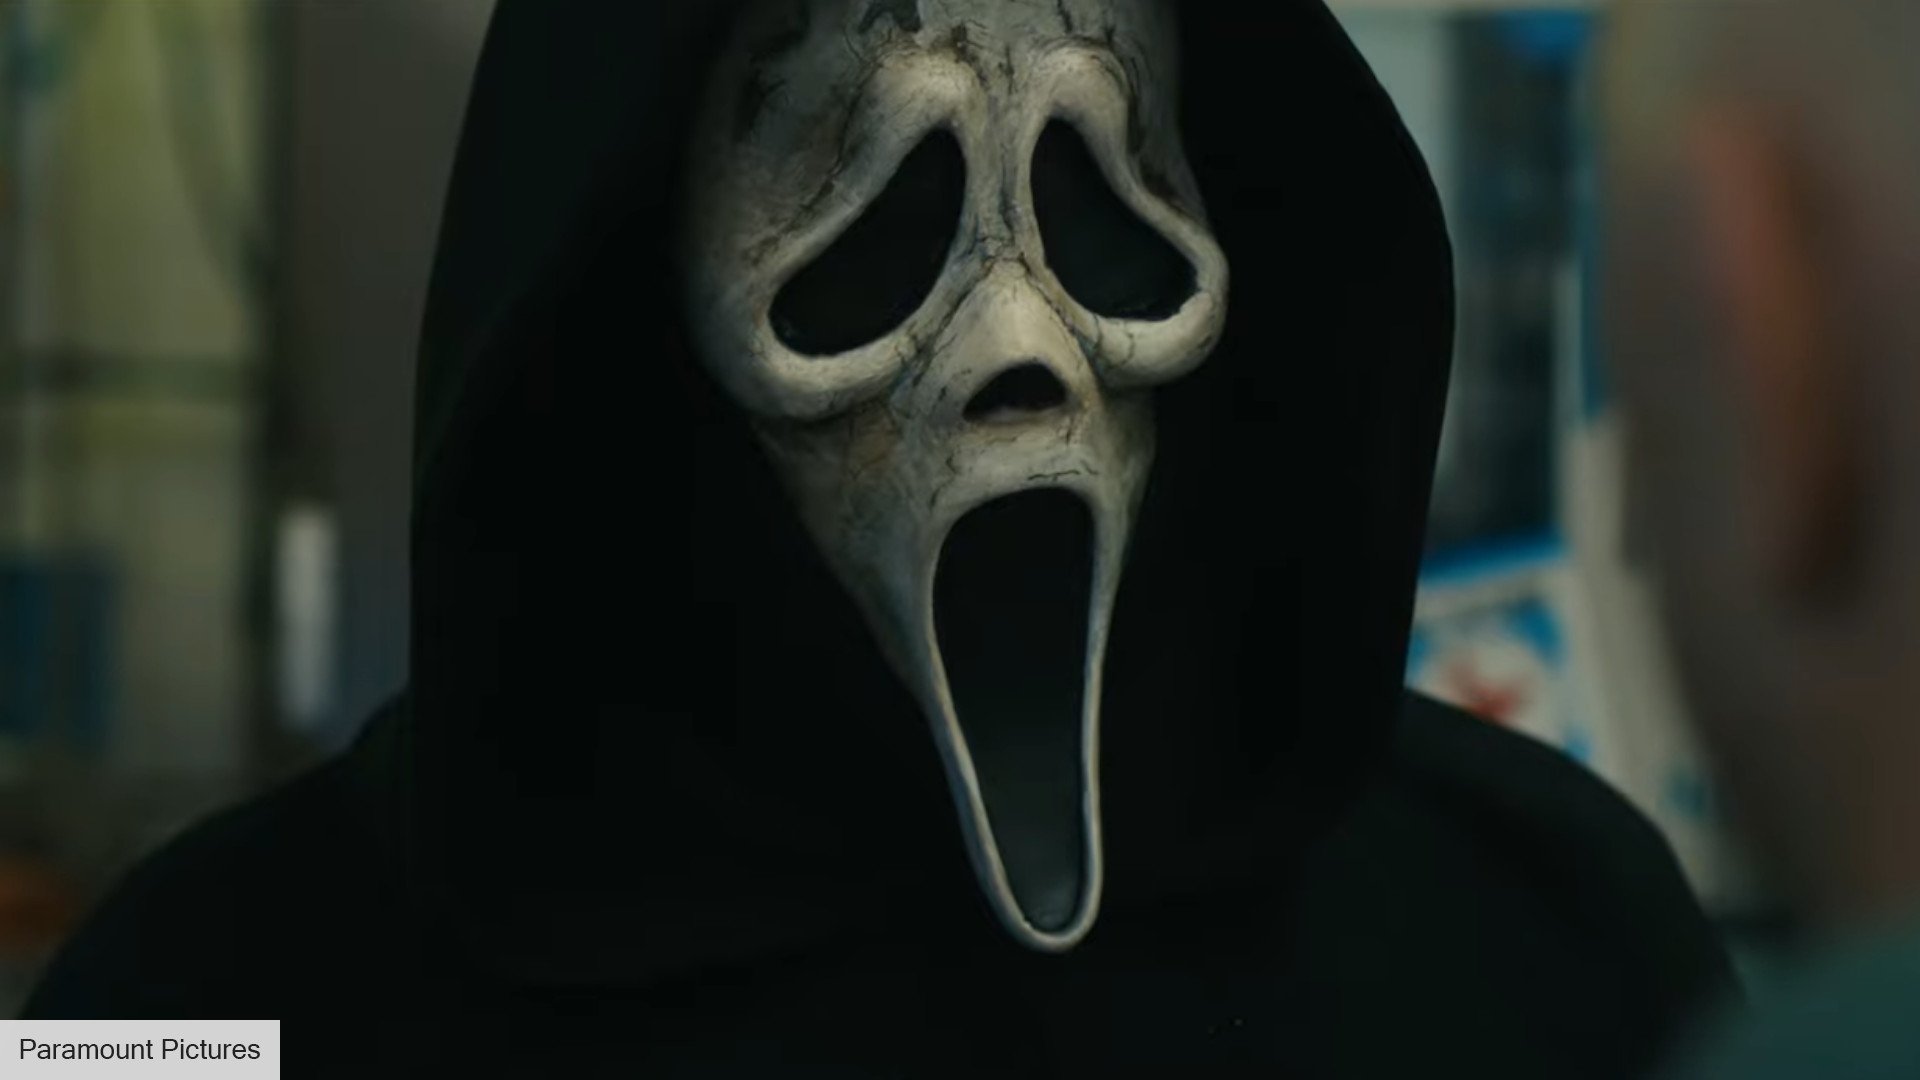 ghostface killer actor